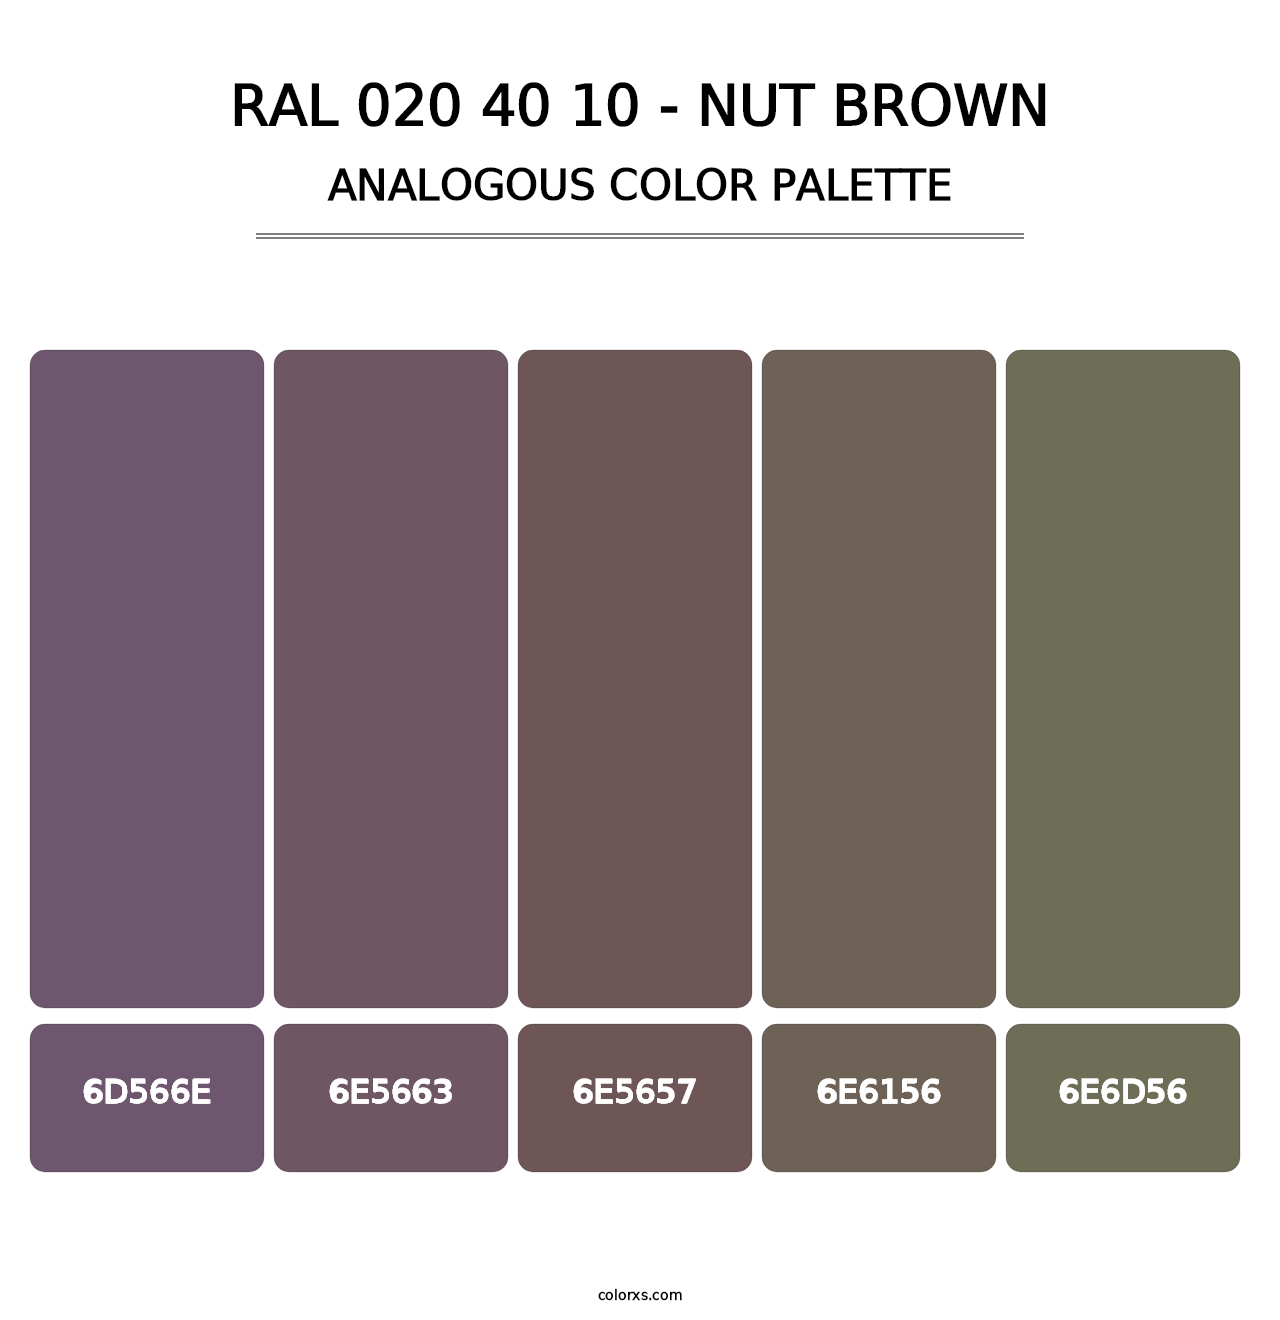 RAL 020 40 10 - Nut Brown - Analogous Color Palette